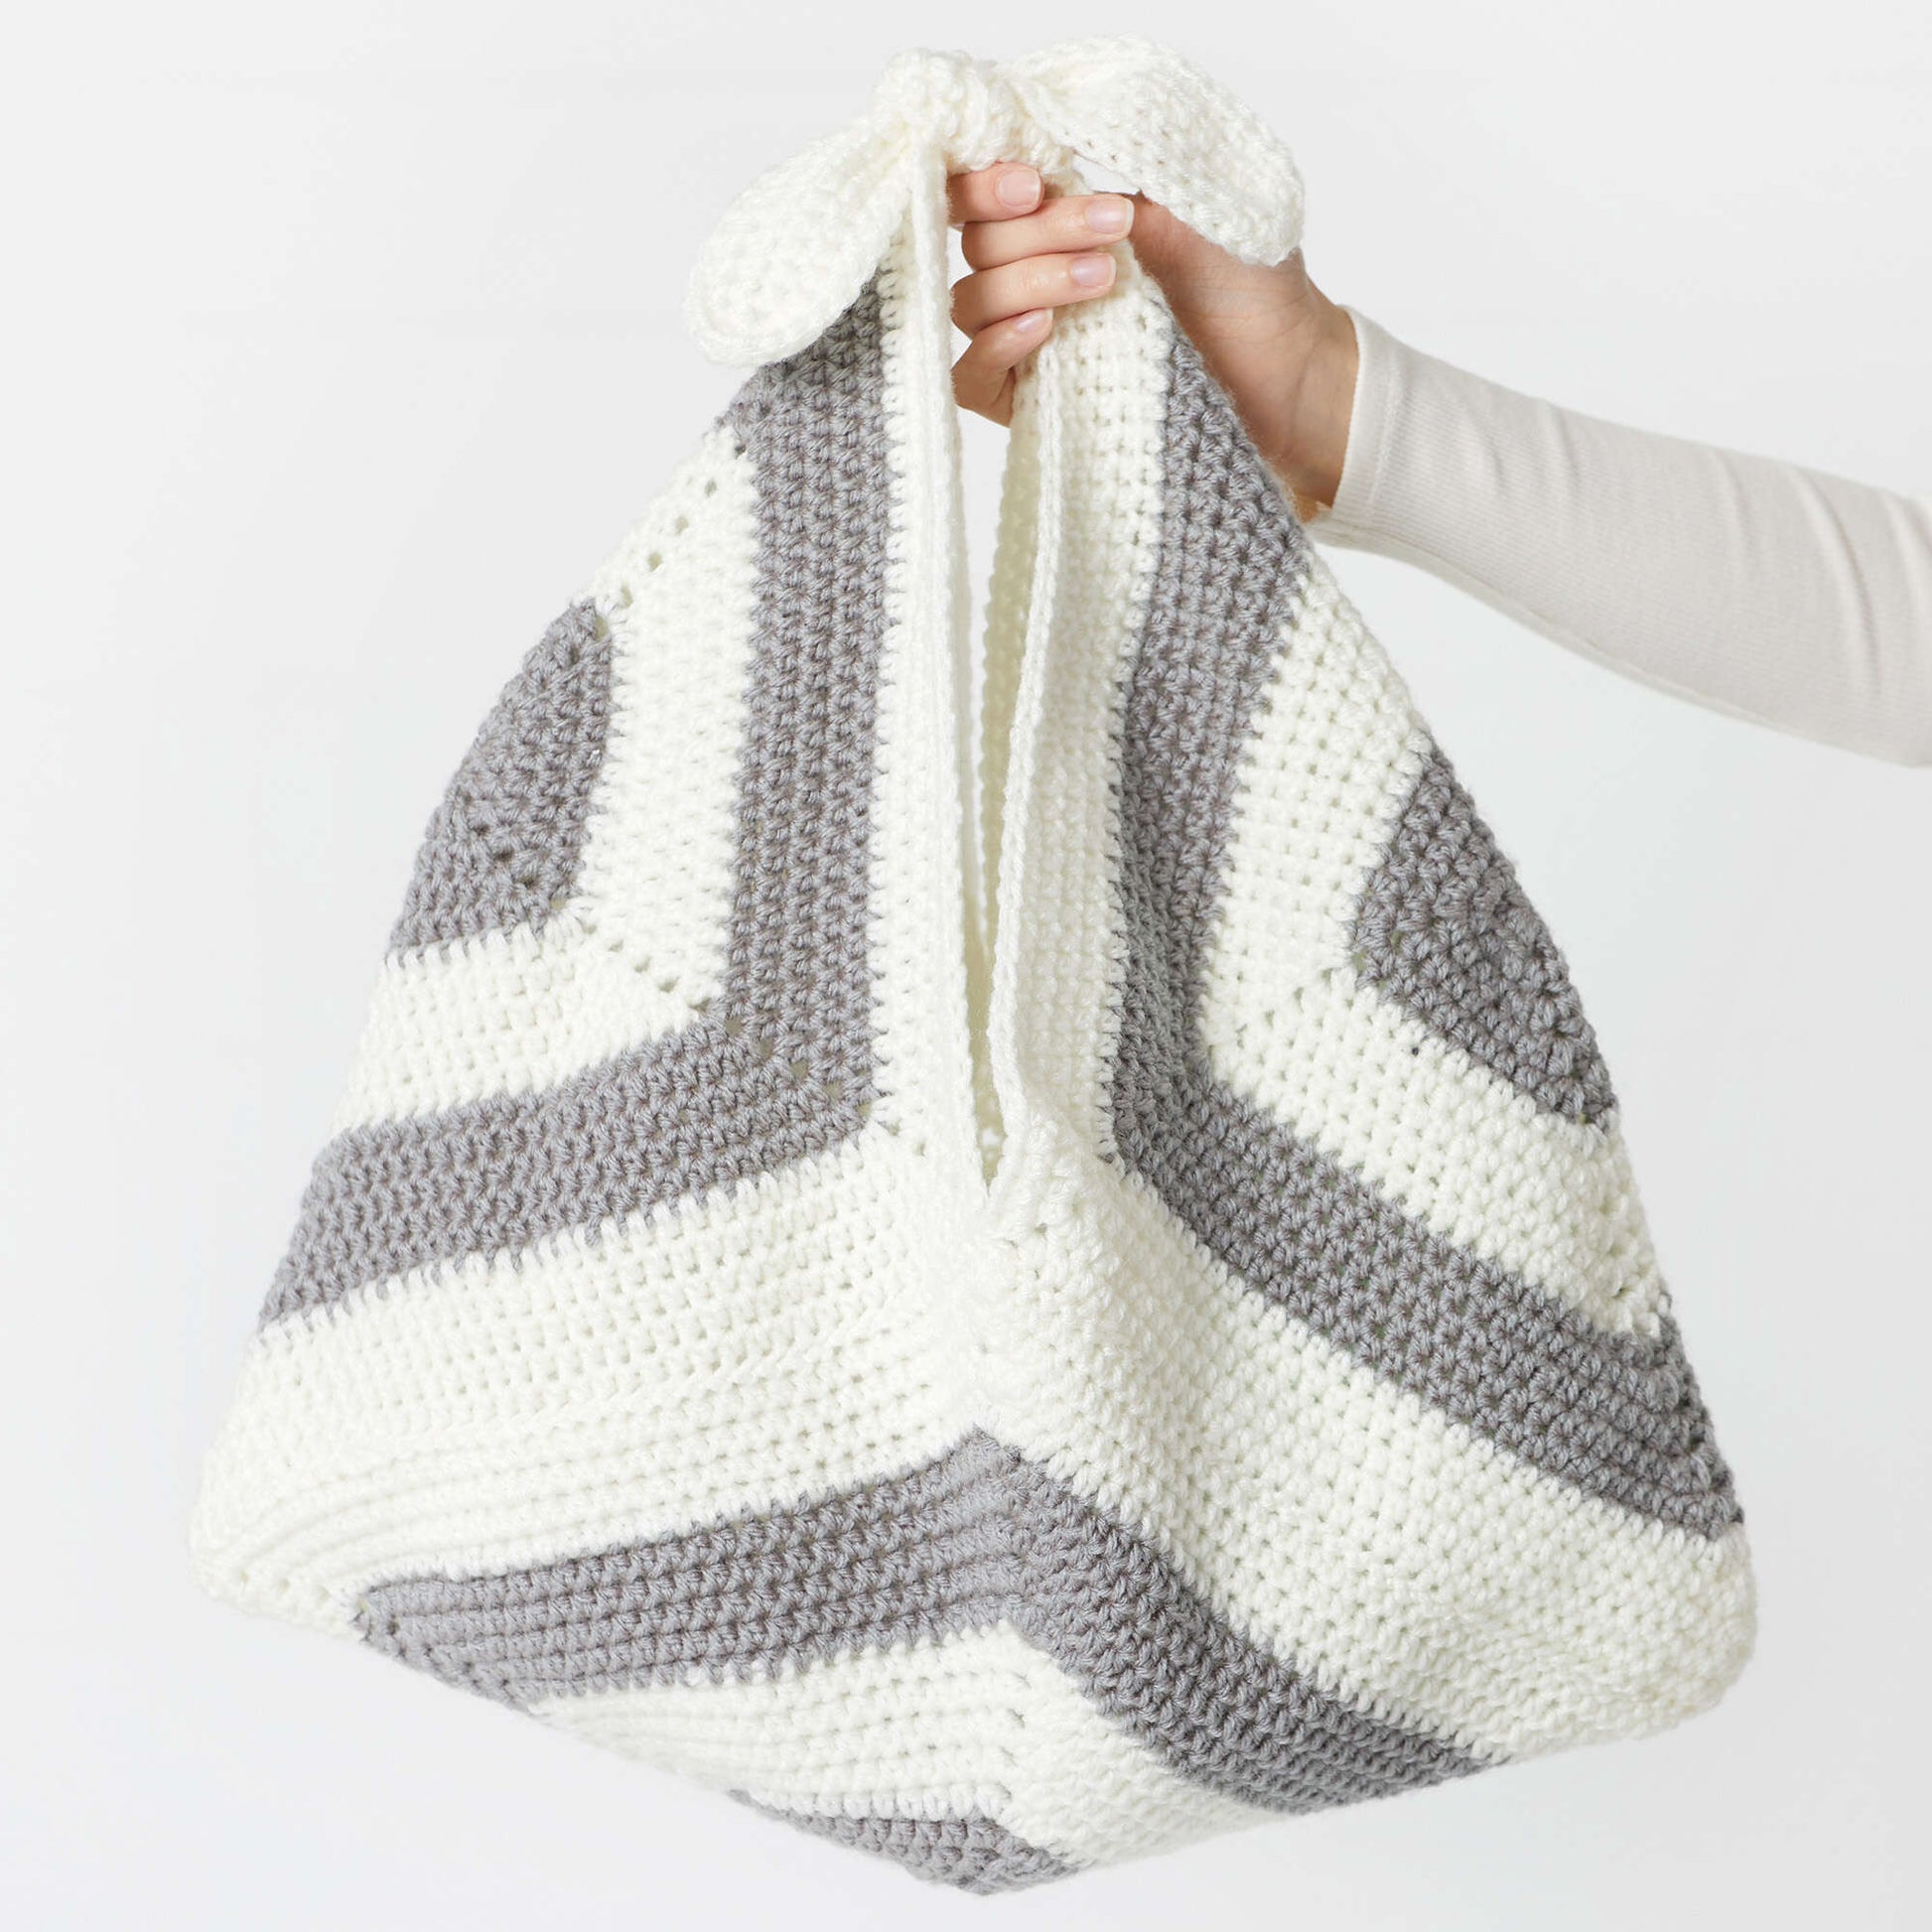 The Bento Bag Knitting Pattern - Darling Jadore, Easy Knit Storage Bag